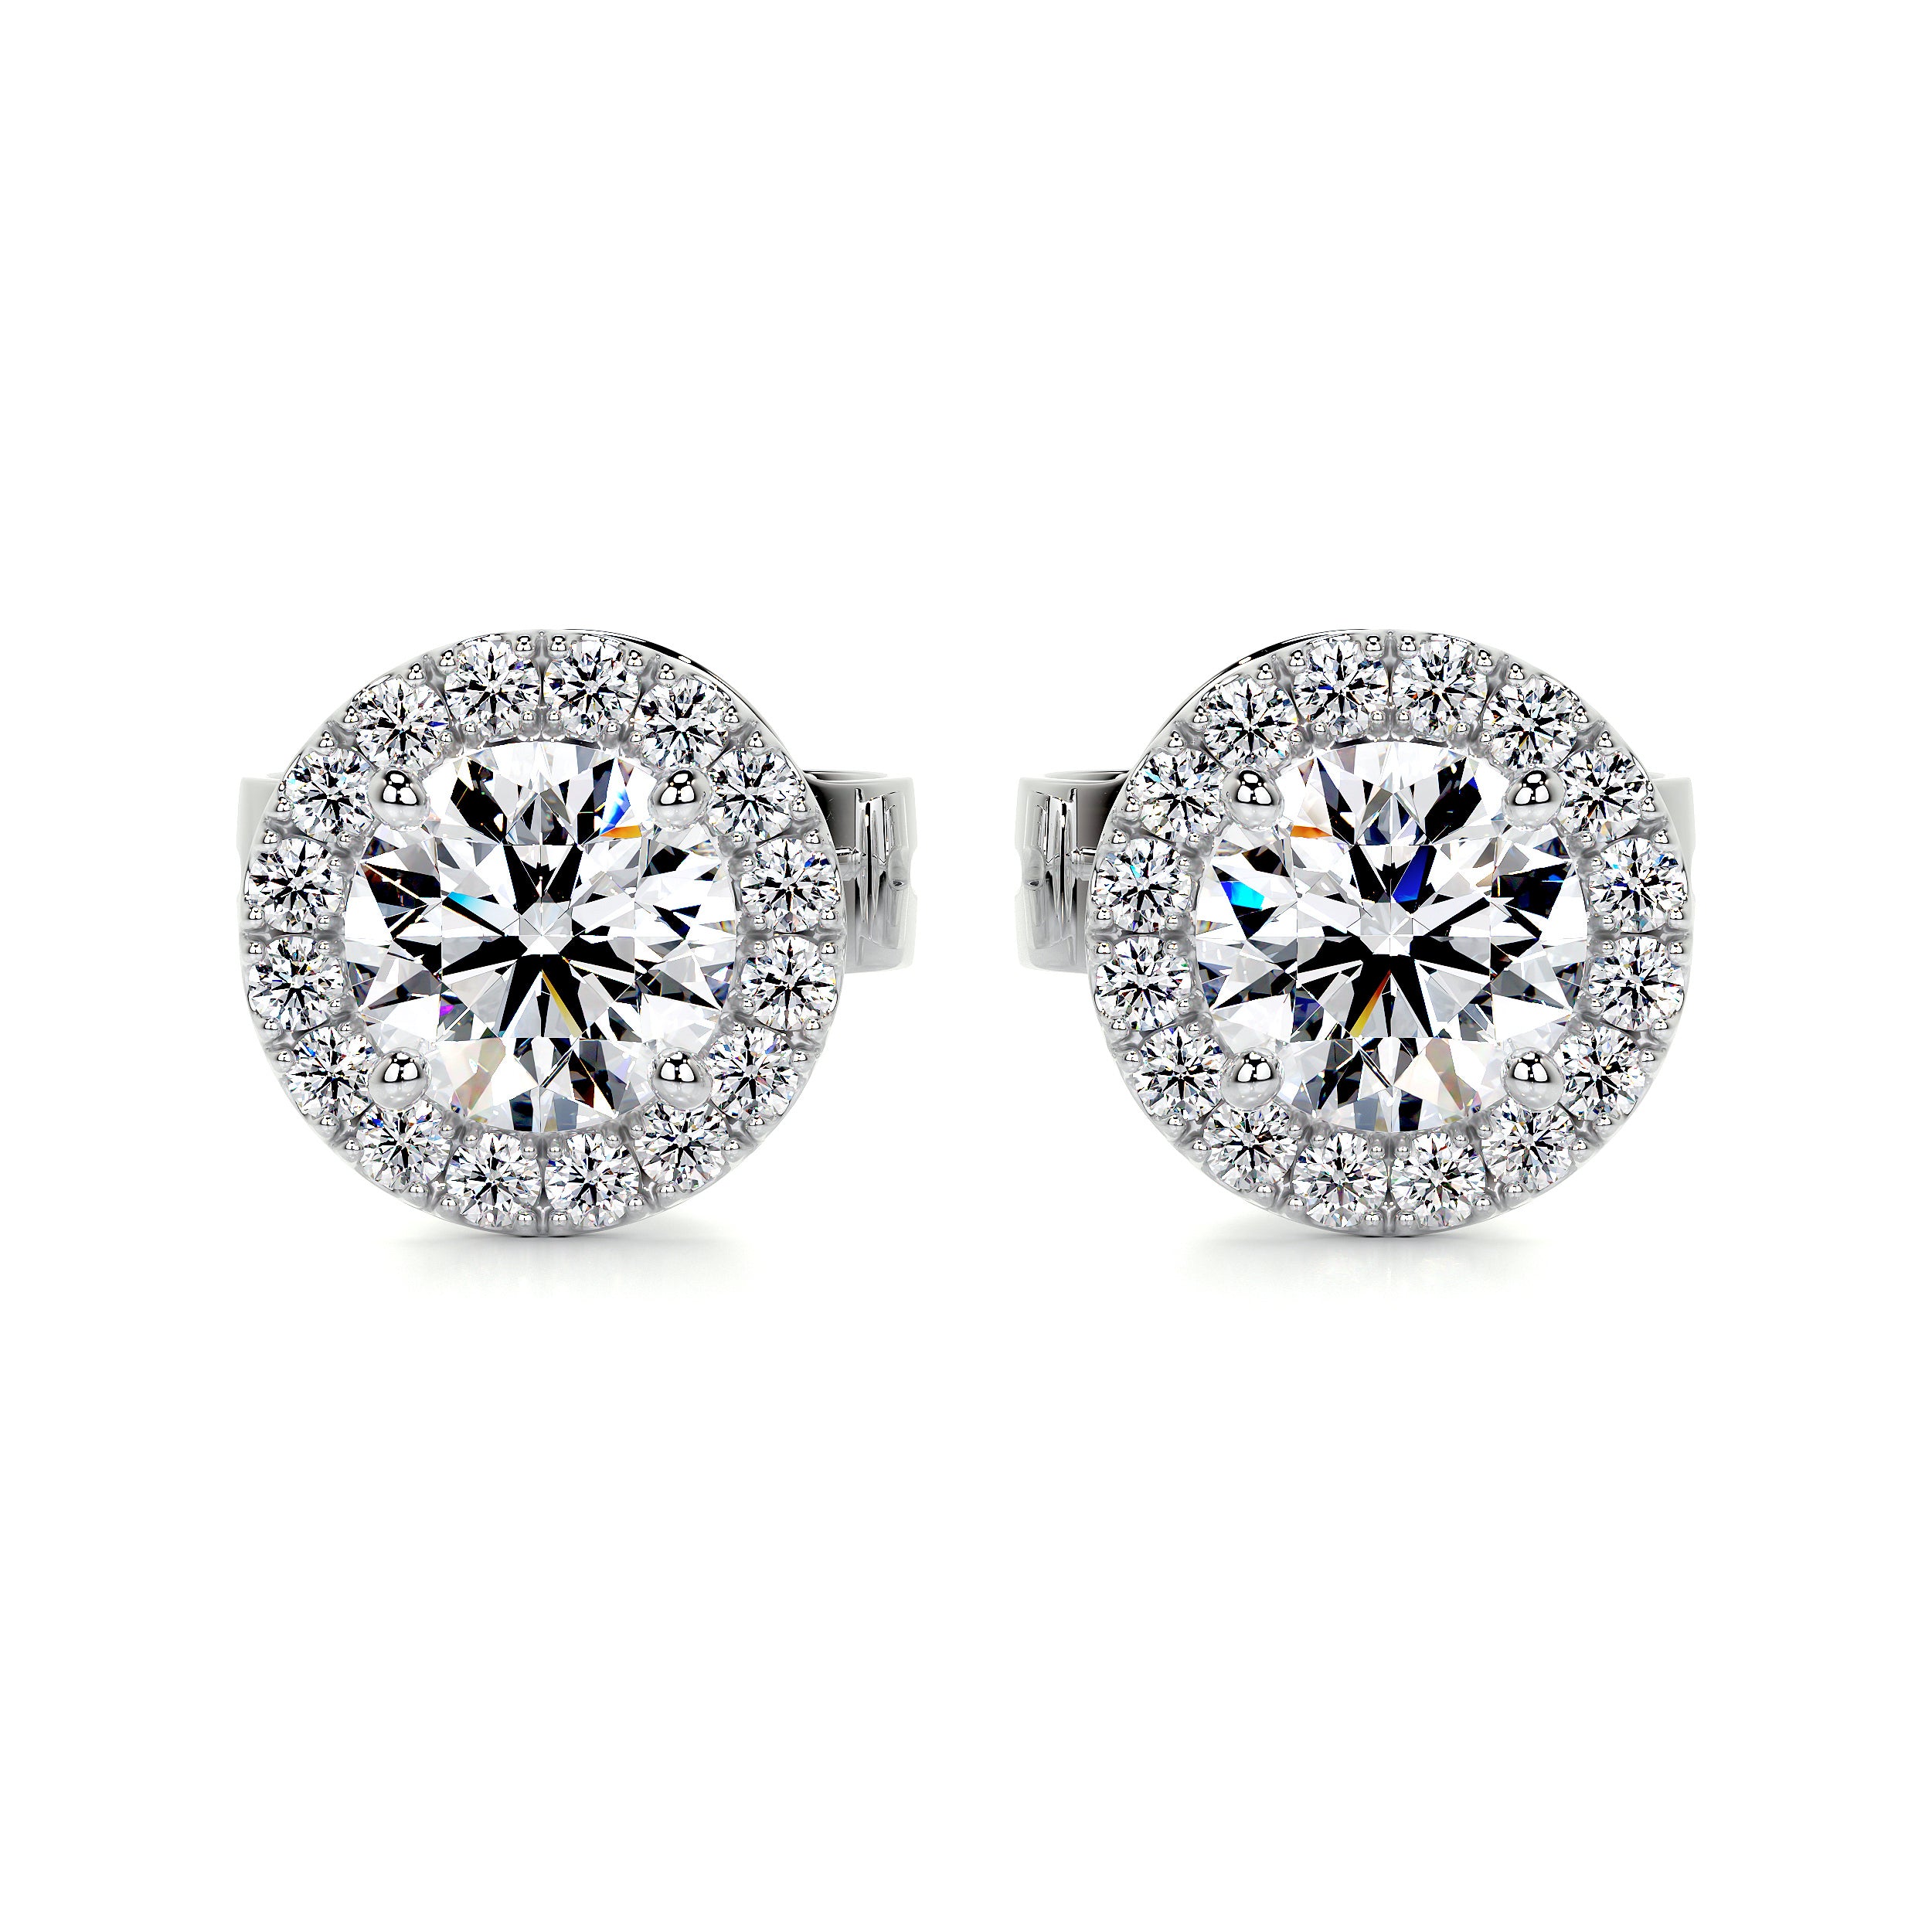 3 carat Emerald Cut Diamond on Sterling Silver Studs, Bridal Earrings by  Margalit Rings – MargalitRings